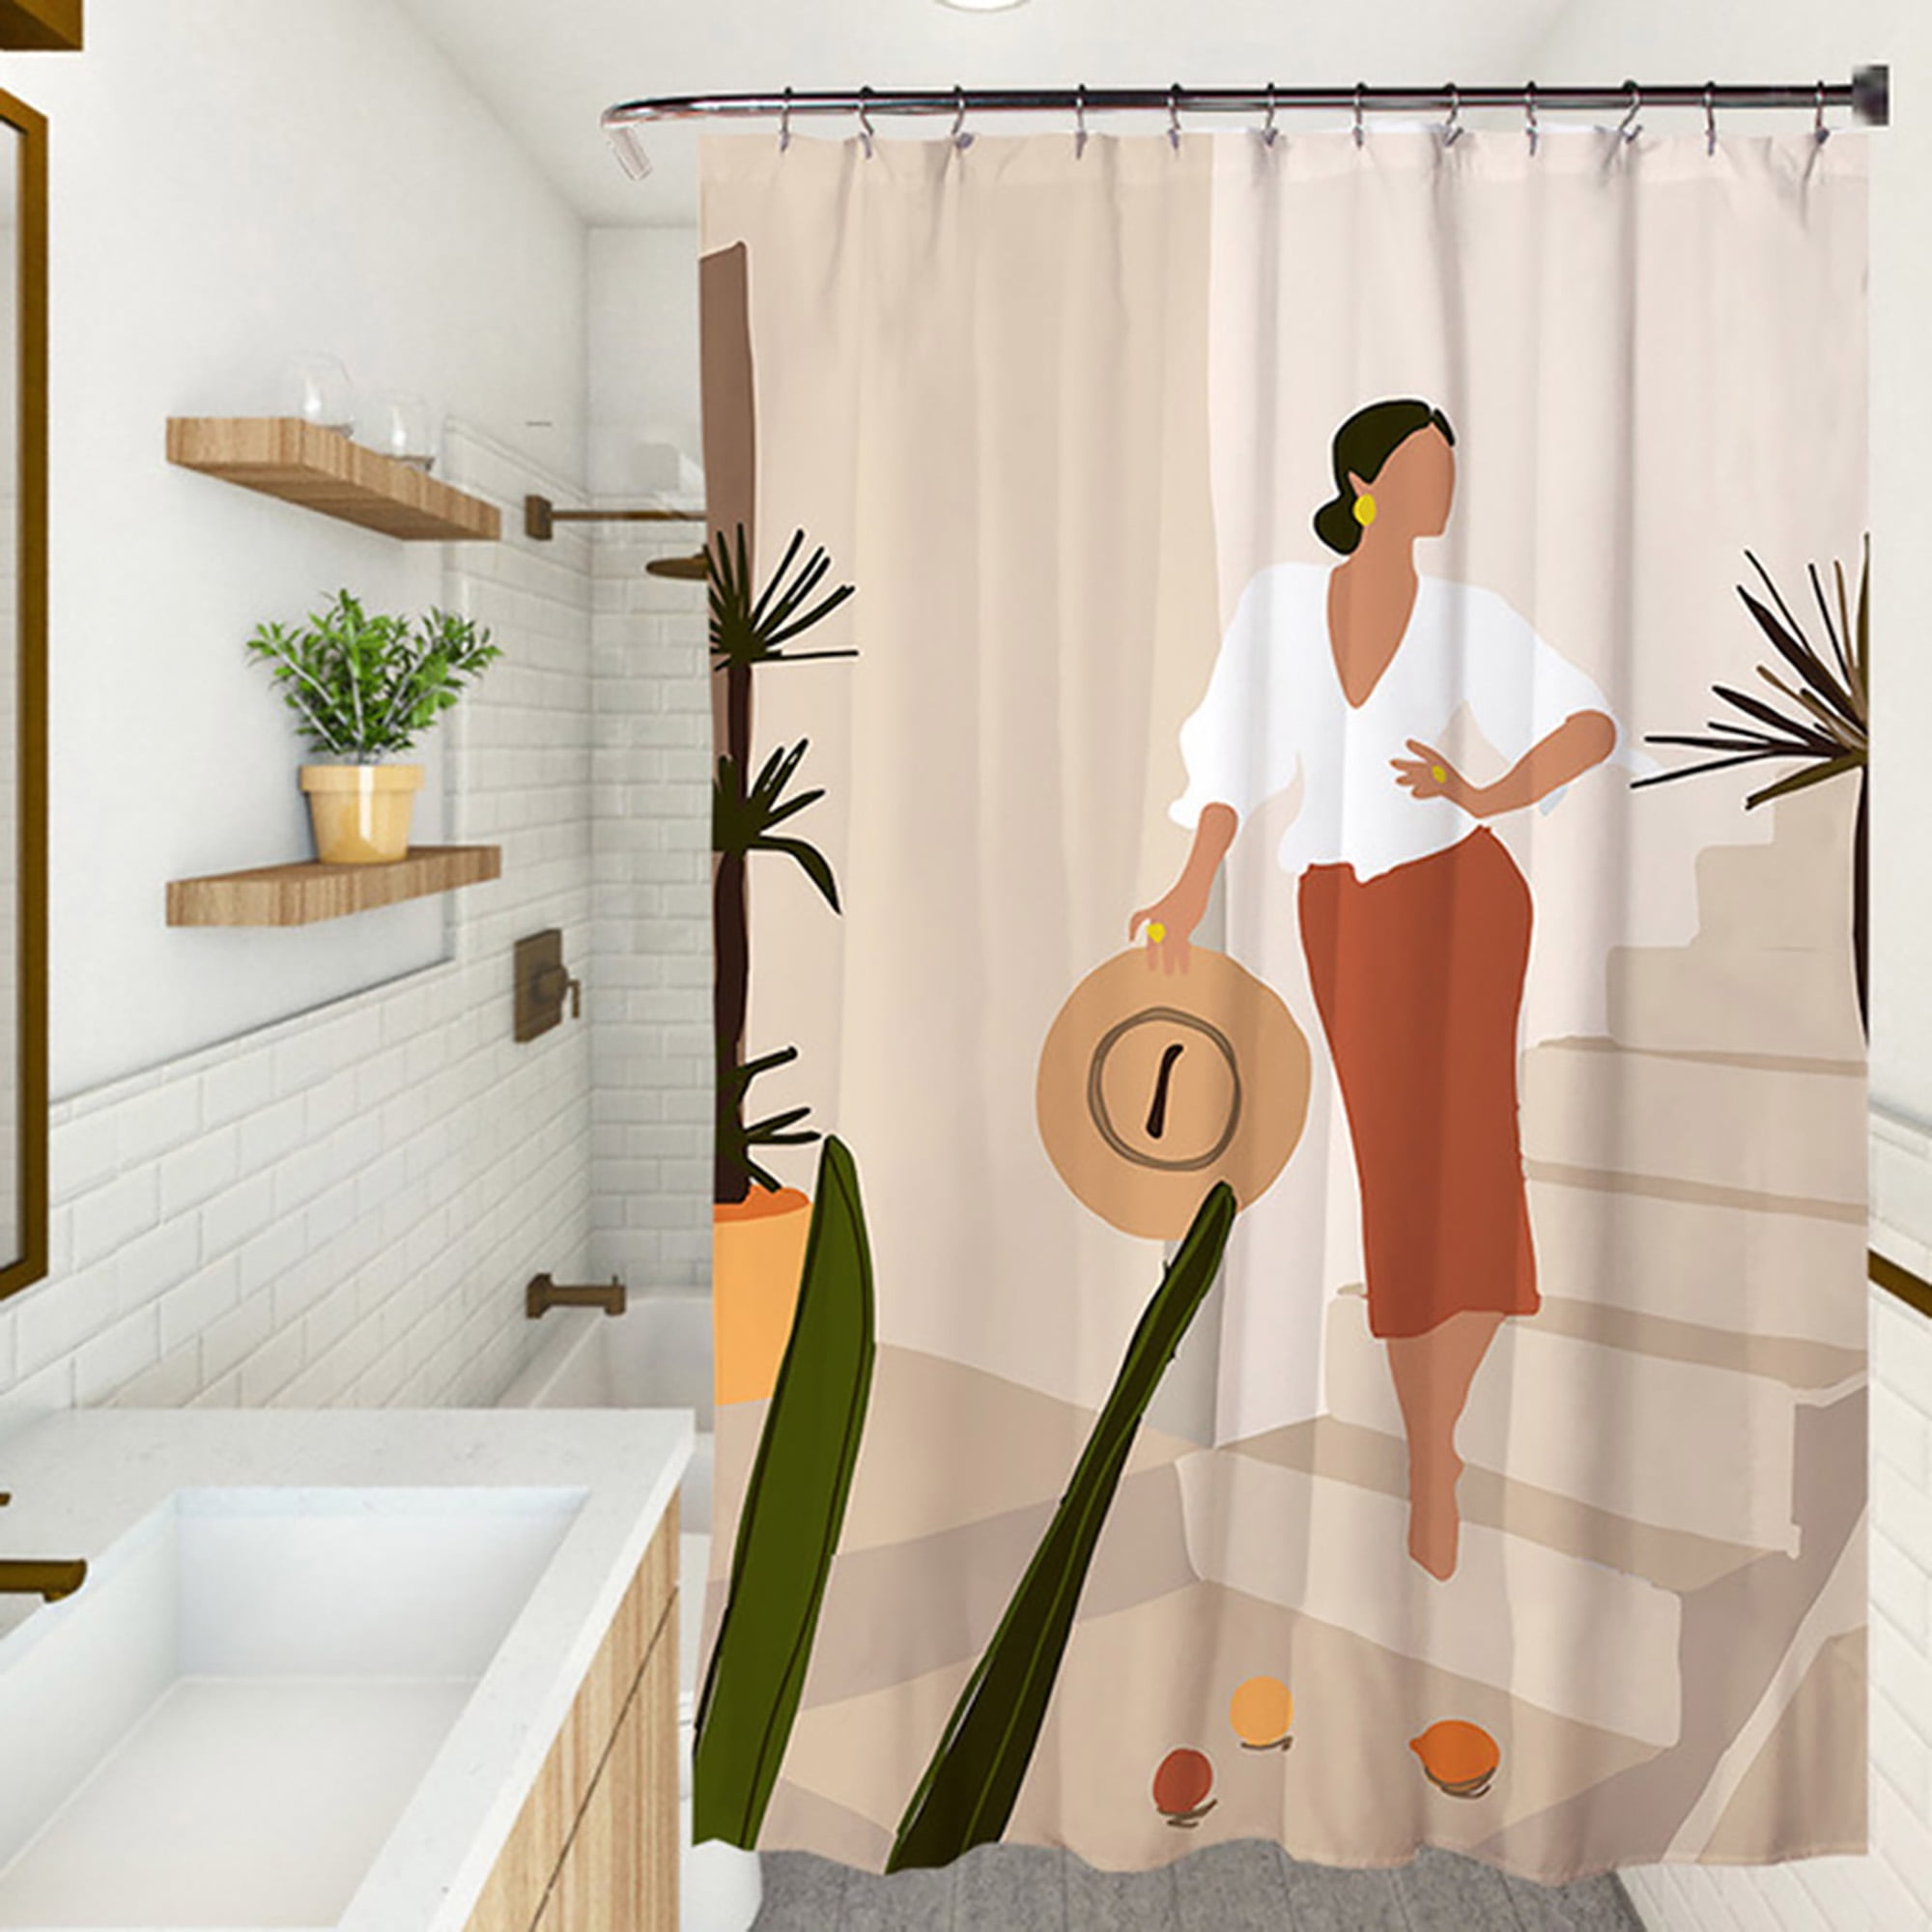 Parrot Design European Style Bathroom Fabric Shower Curtain Liner w Hooks Set 